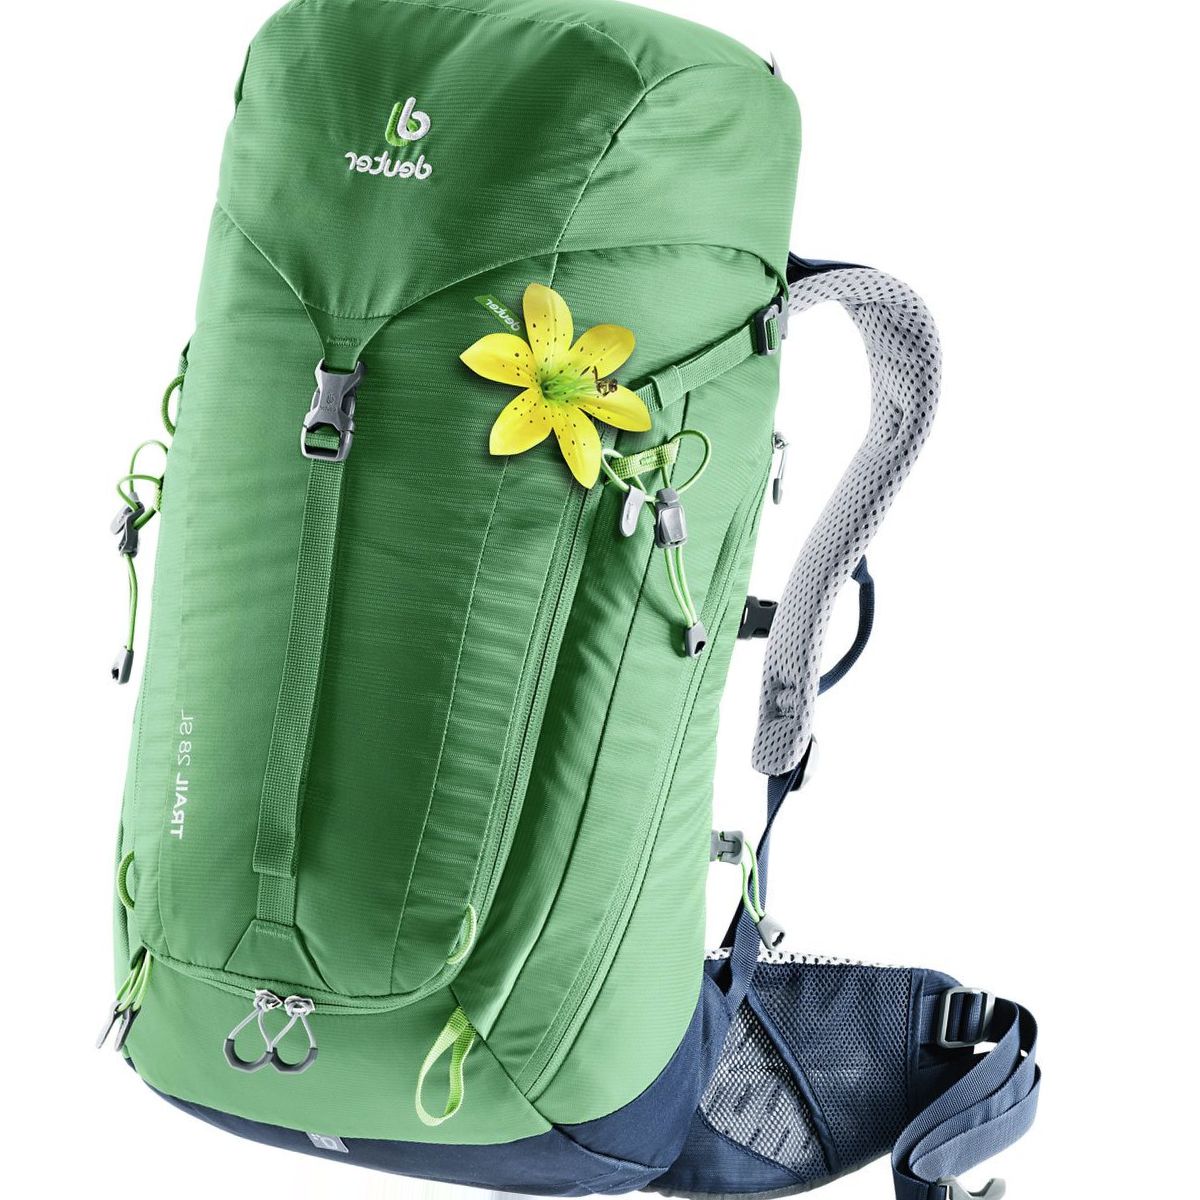 Deuter Trail 28 SL Backpack - Women's